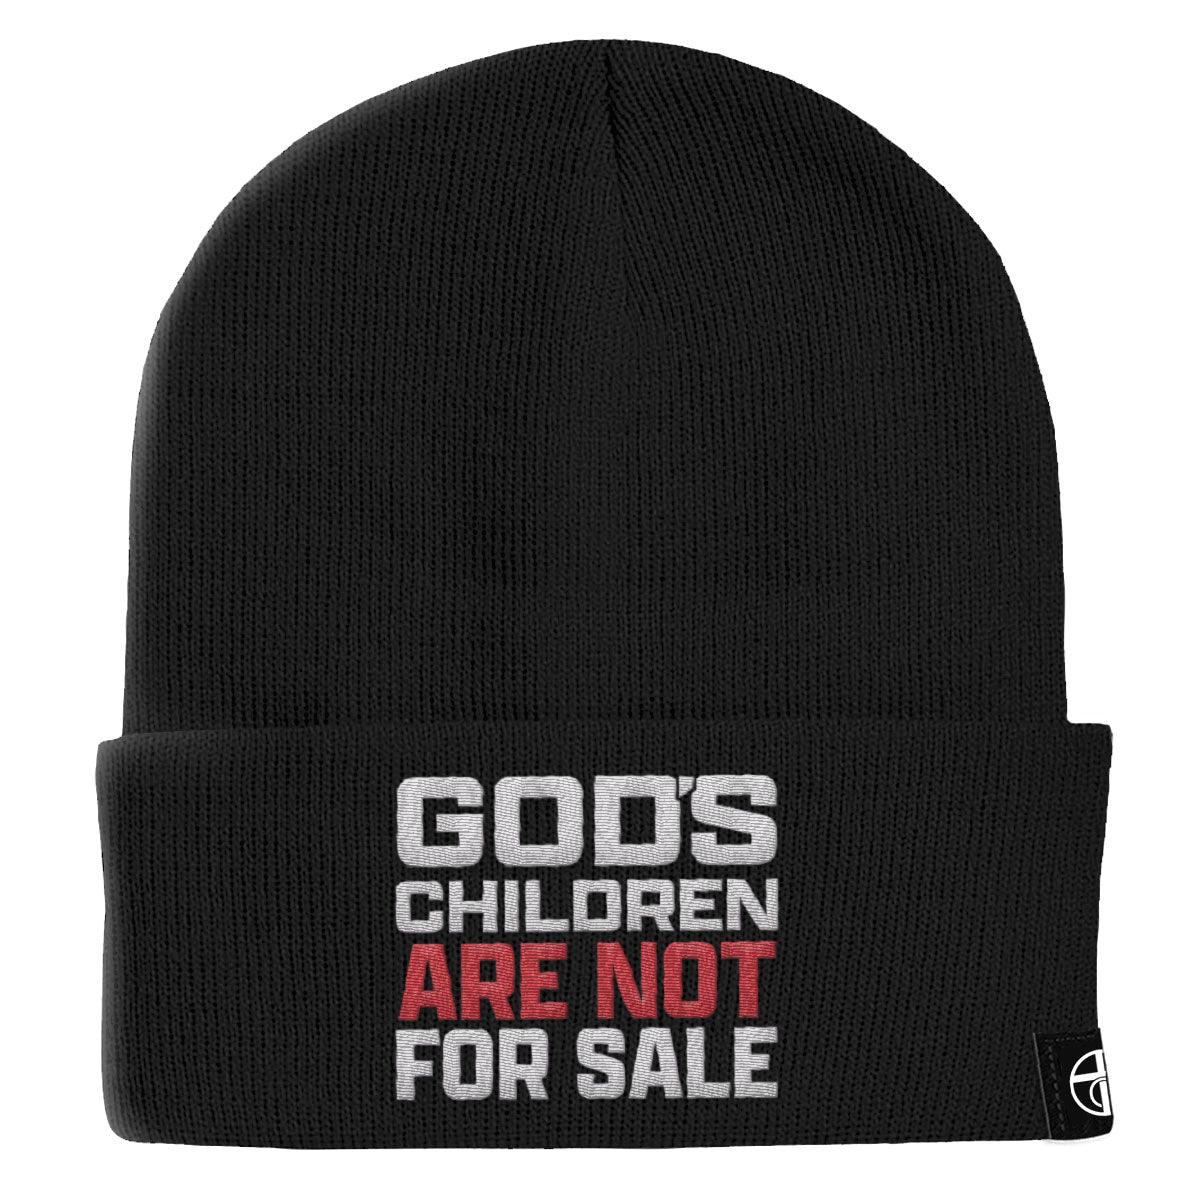 God's Children Are Not For Sale Beanies